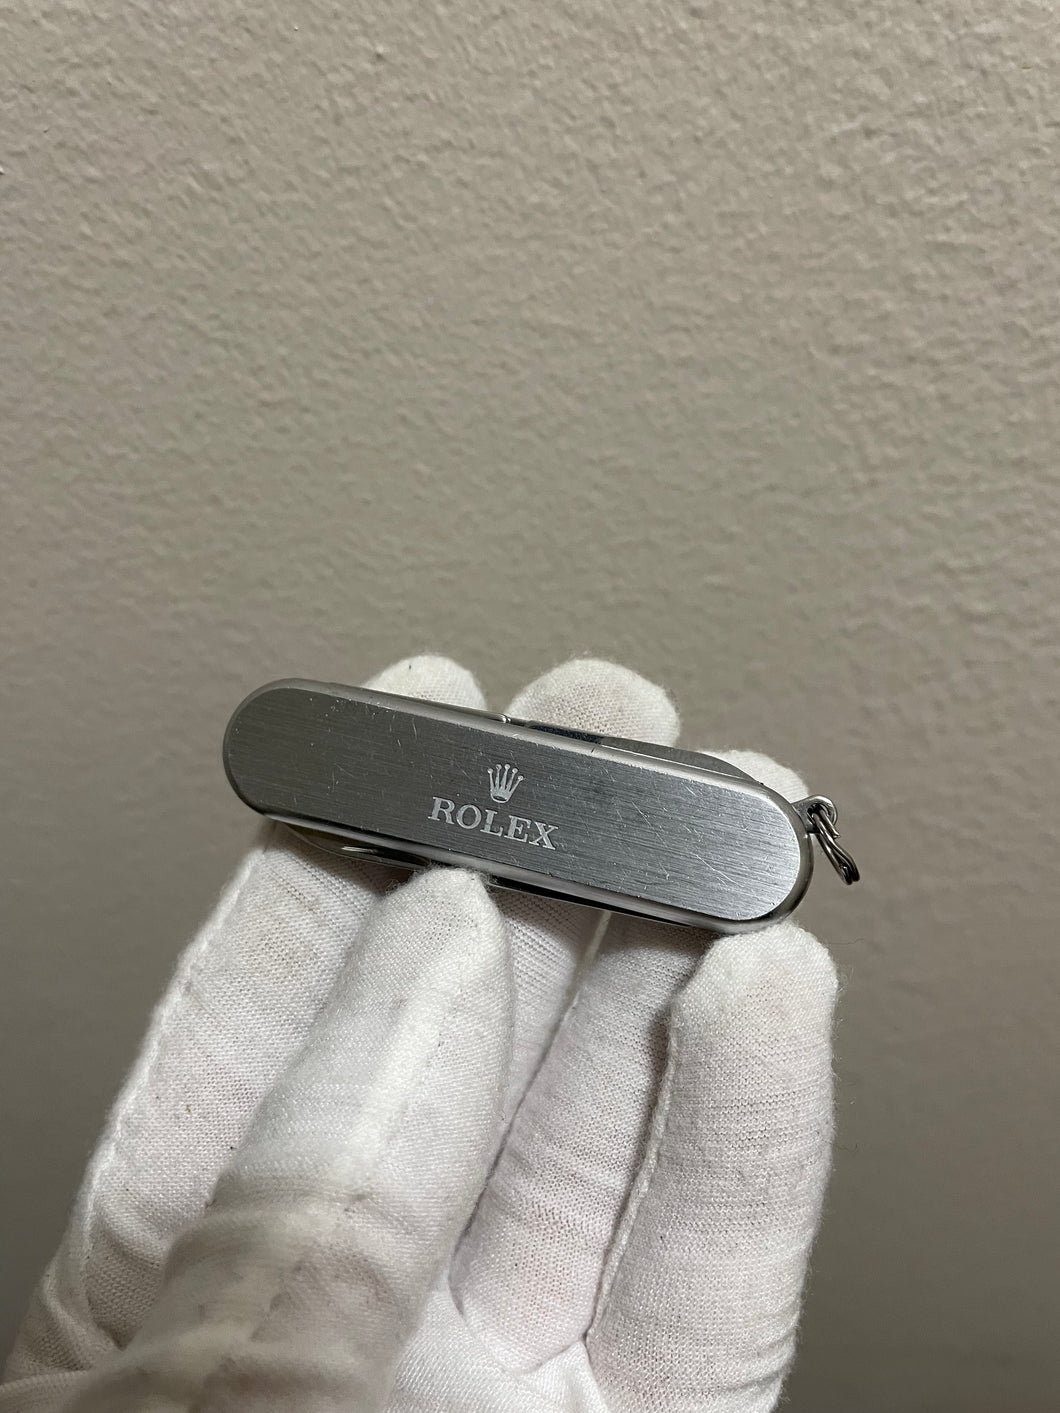 Rolex grey pocket knife